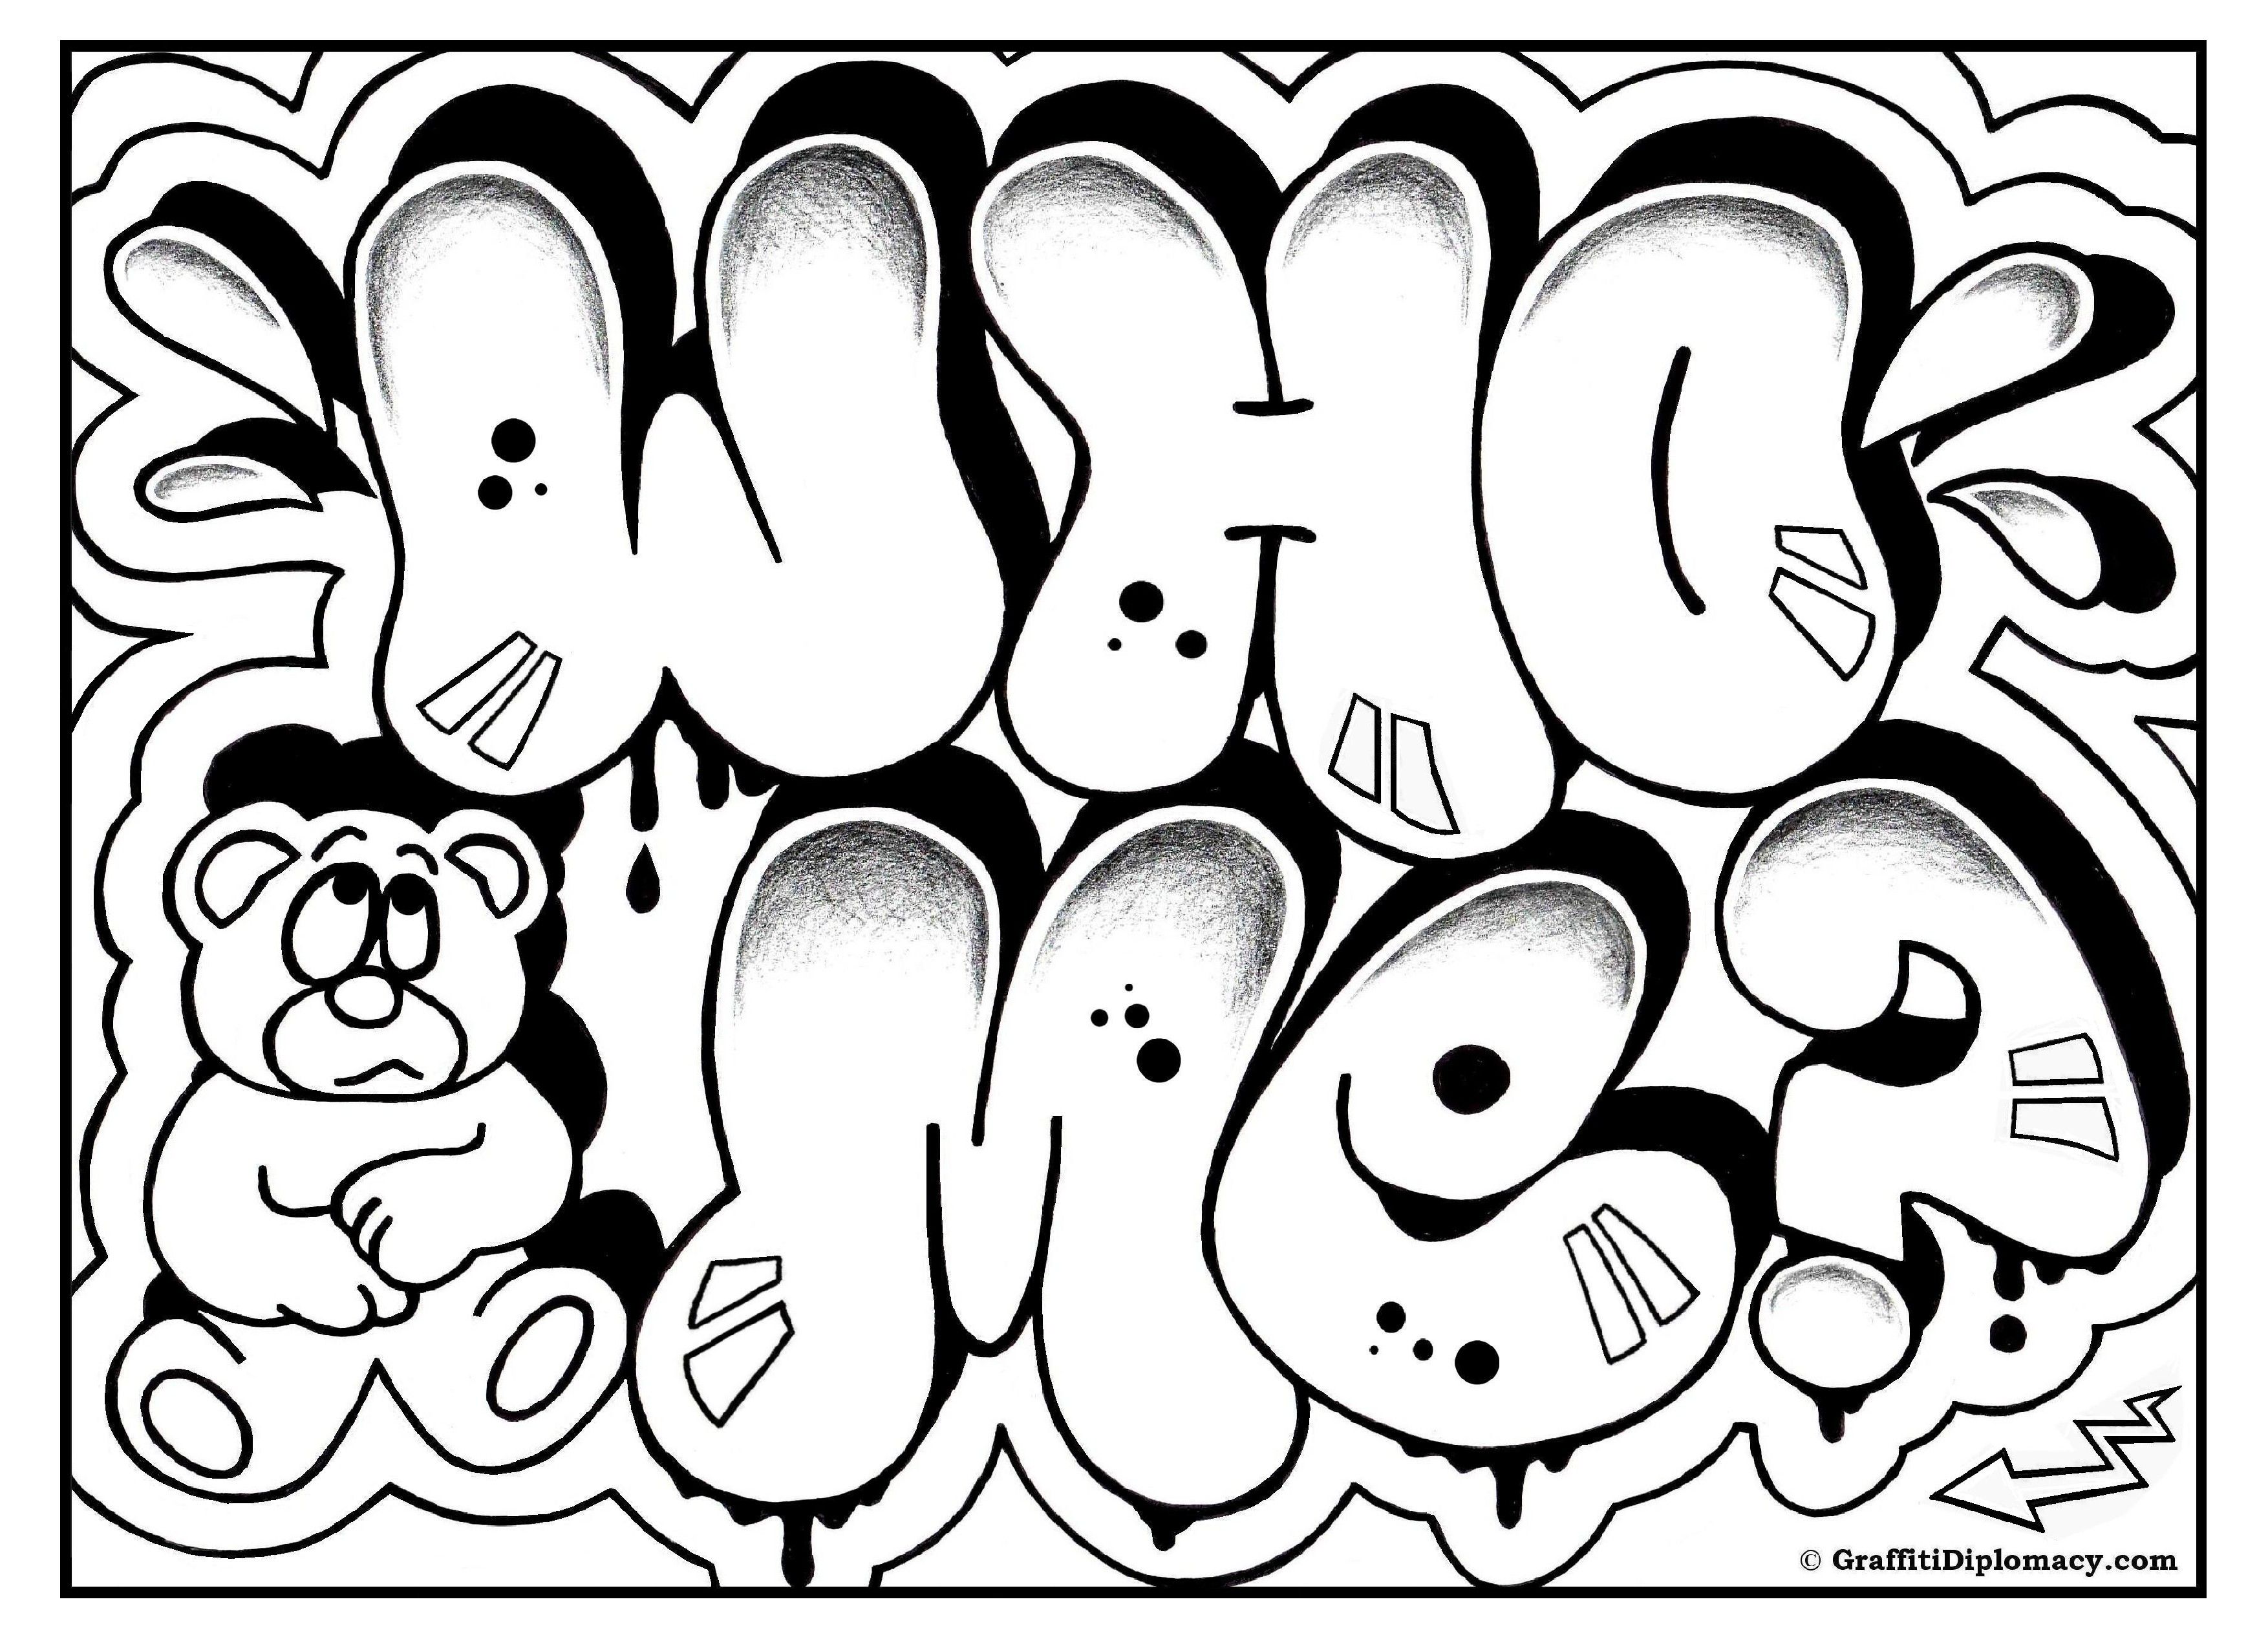 bubble letters graffiti drawings - Clip Art Library